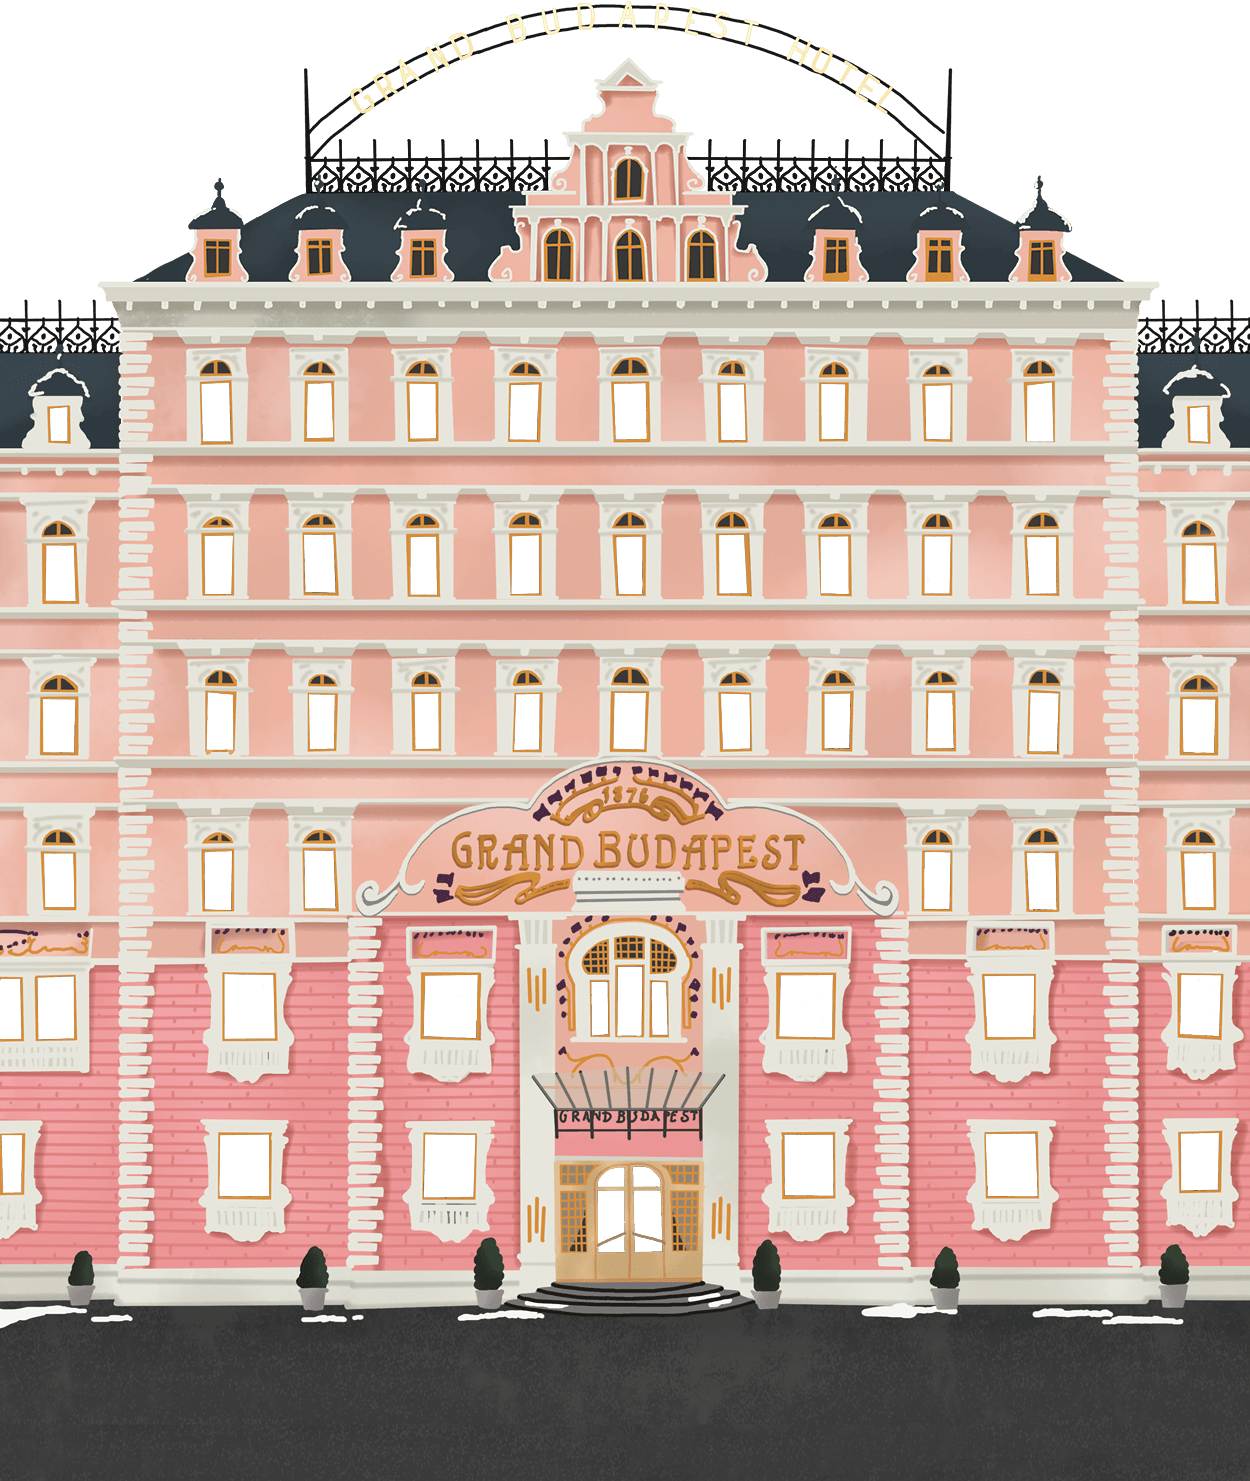 The Grand Budapest Hotel Wallpaper. (37++ Wallpaper)